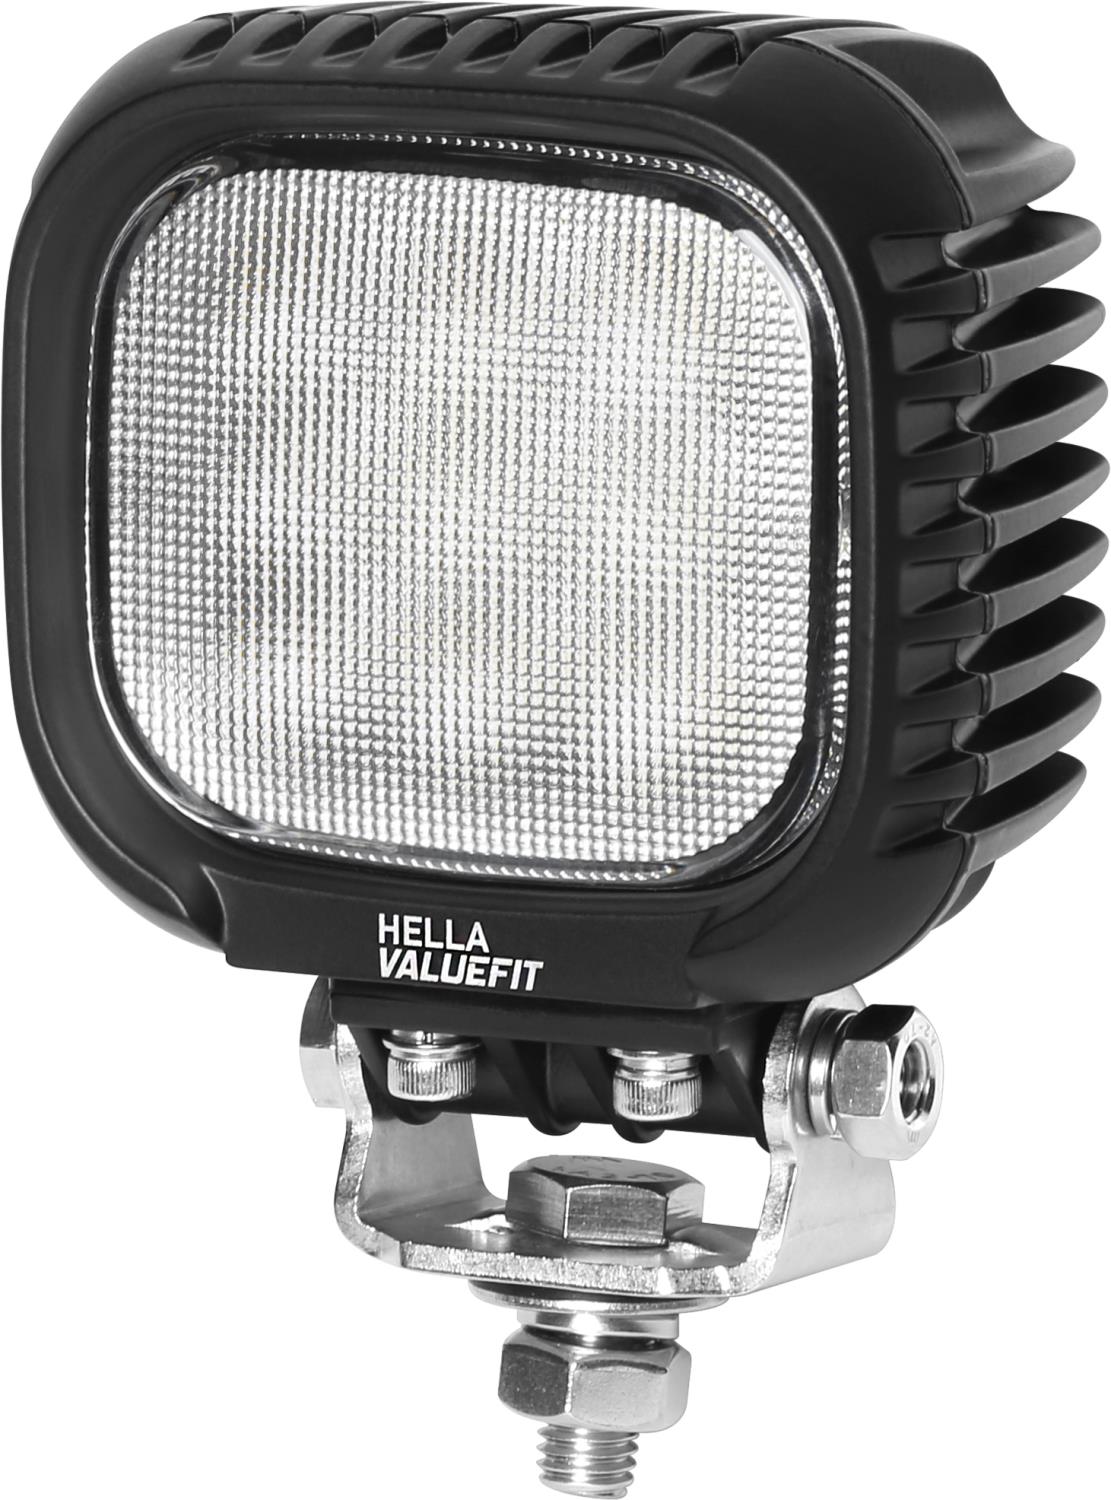 Hella ValueFit LED Work Lamp, 3000 Lumens [Square]